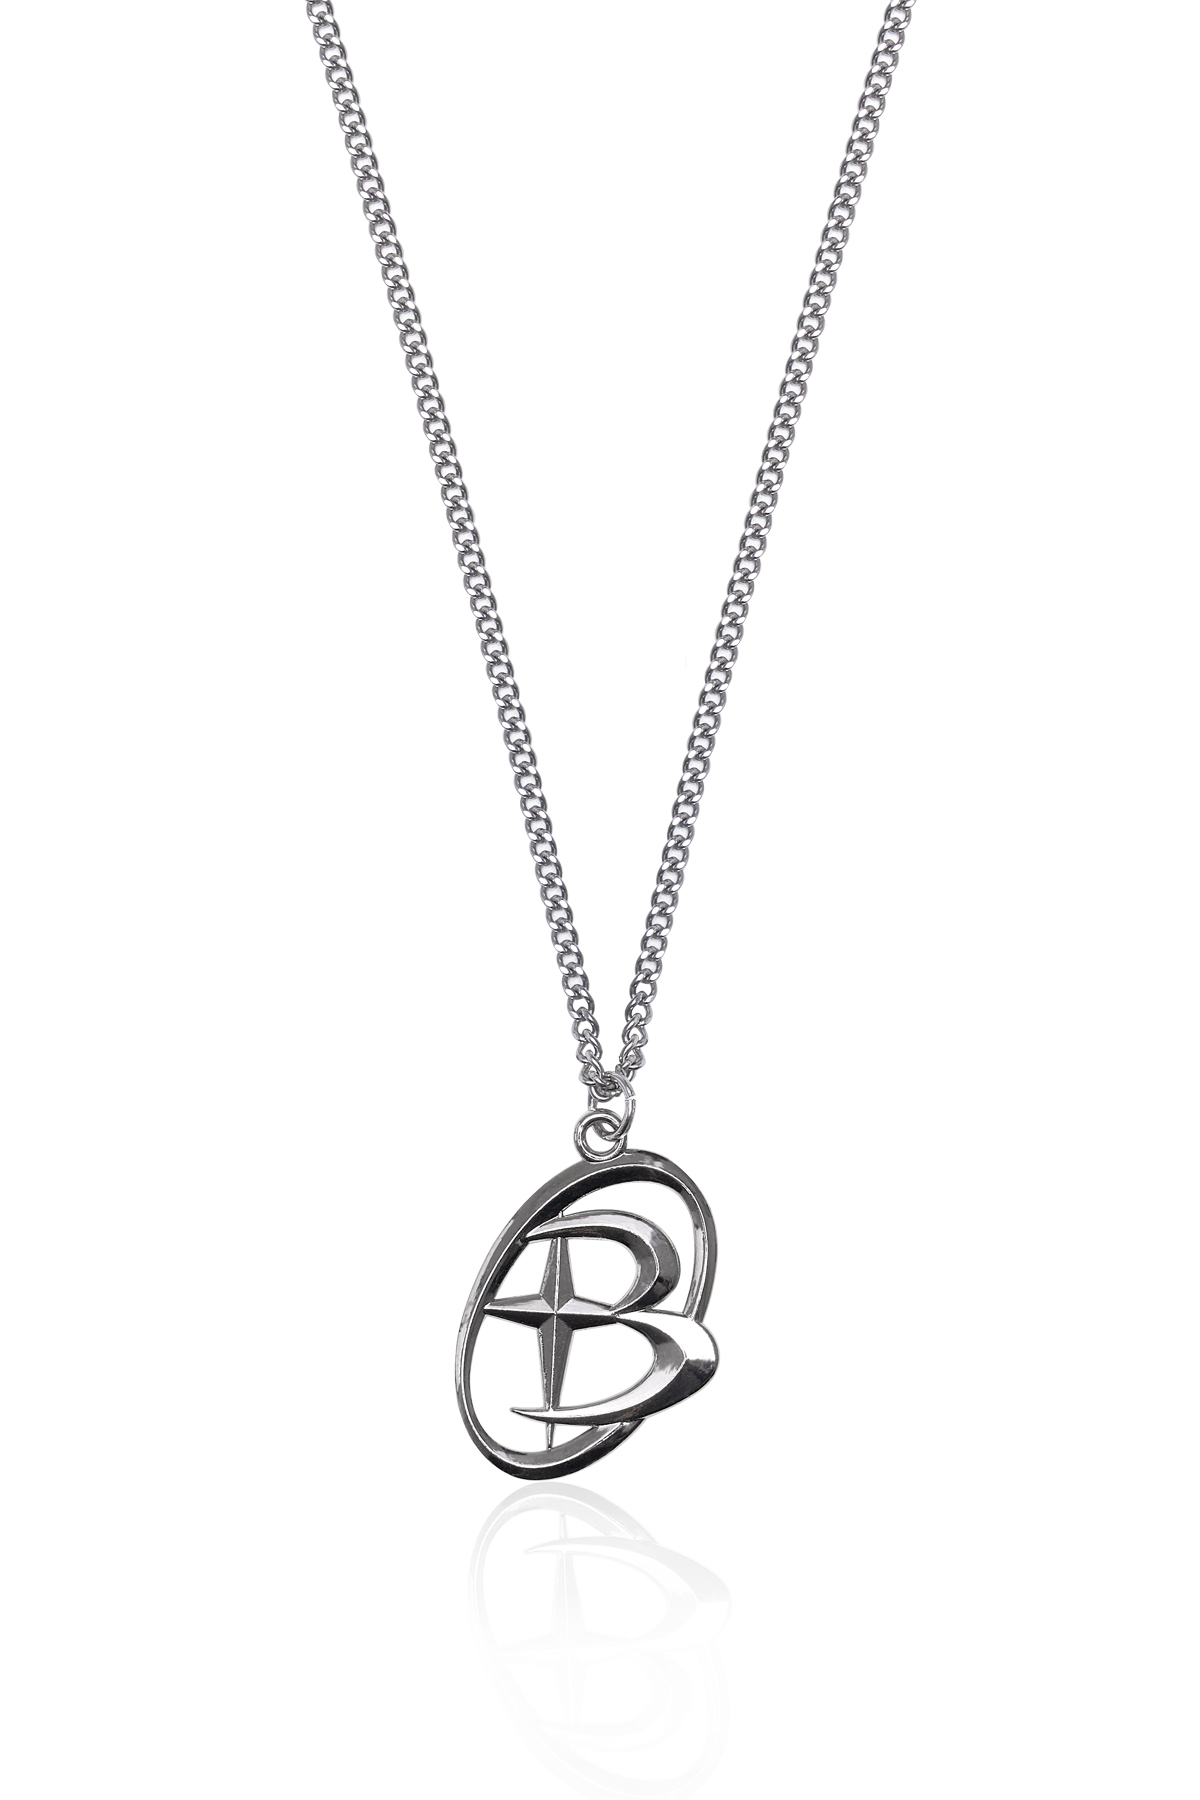 Euphoria B symbol drop necklace